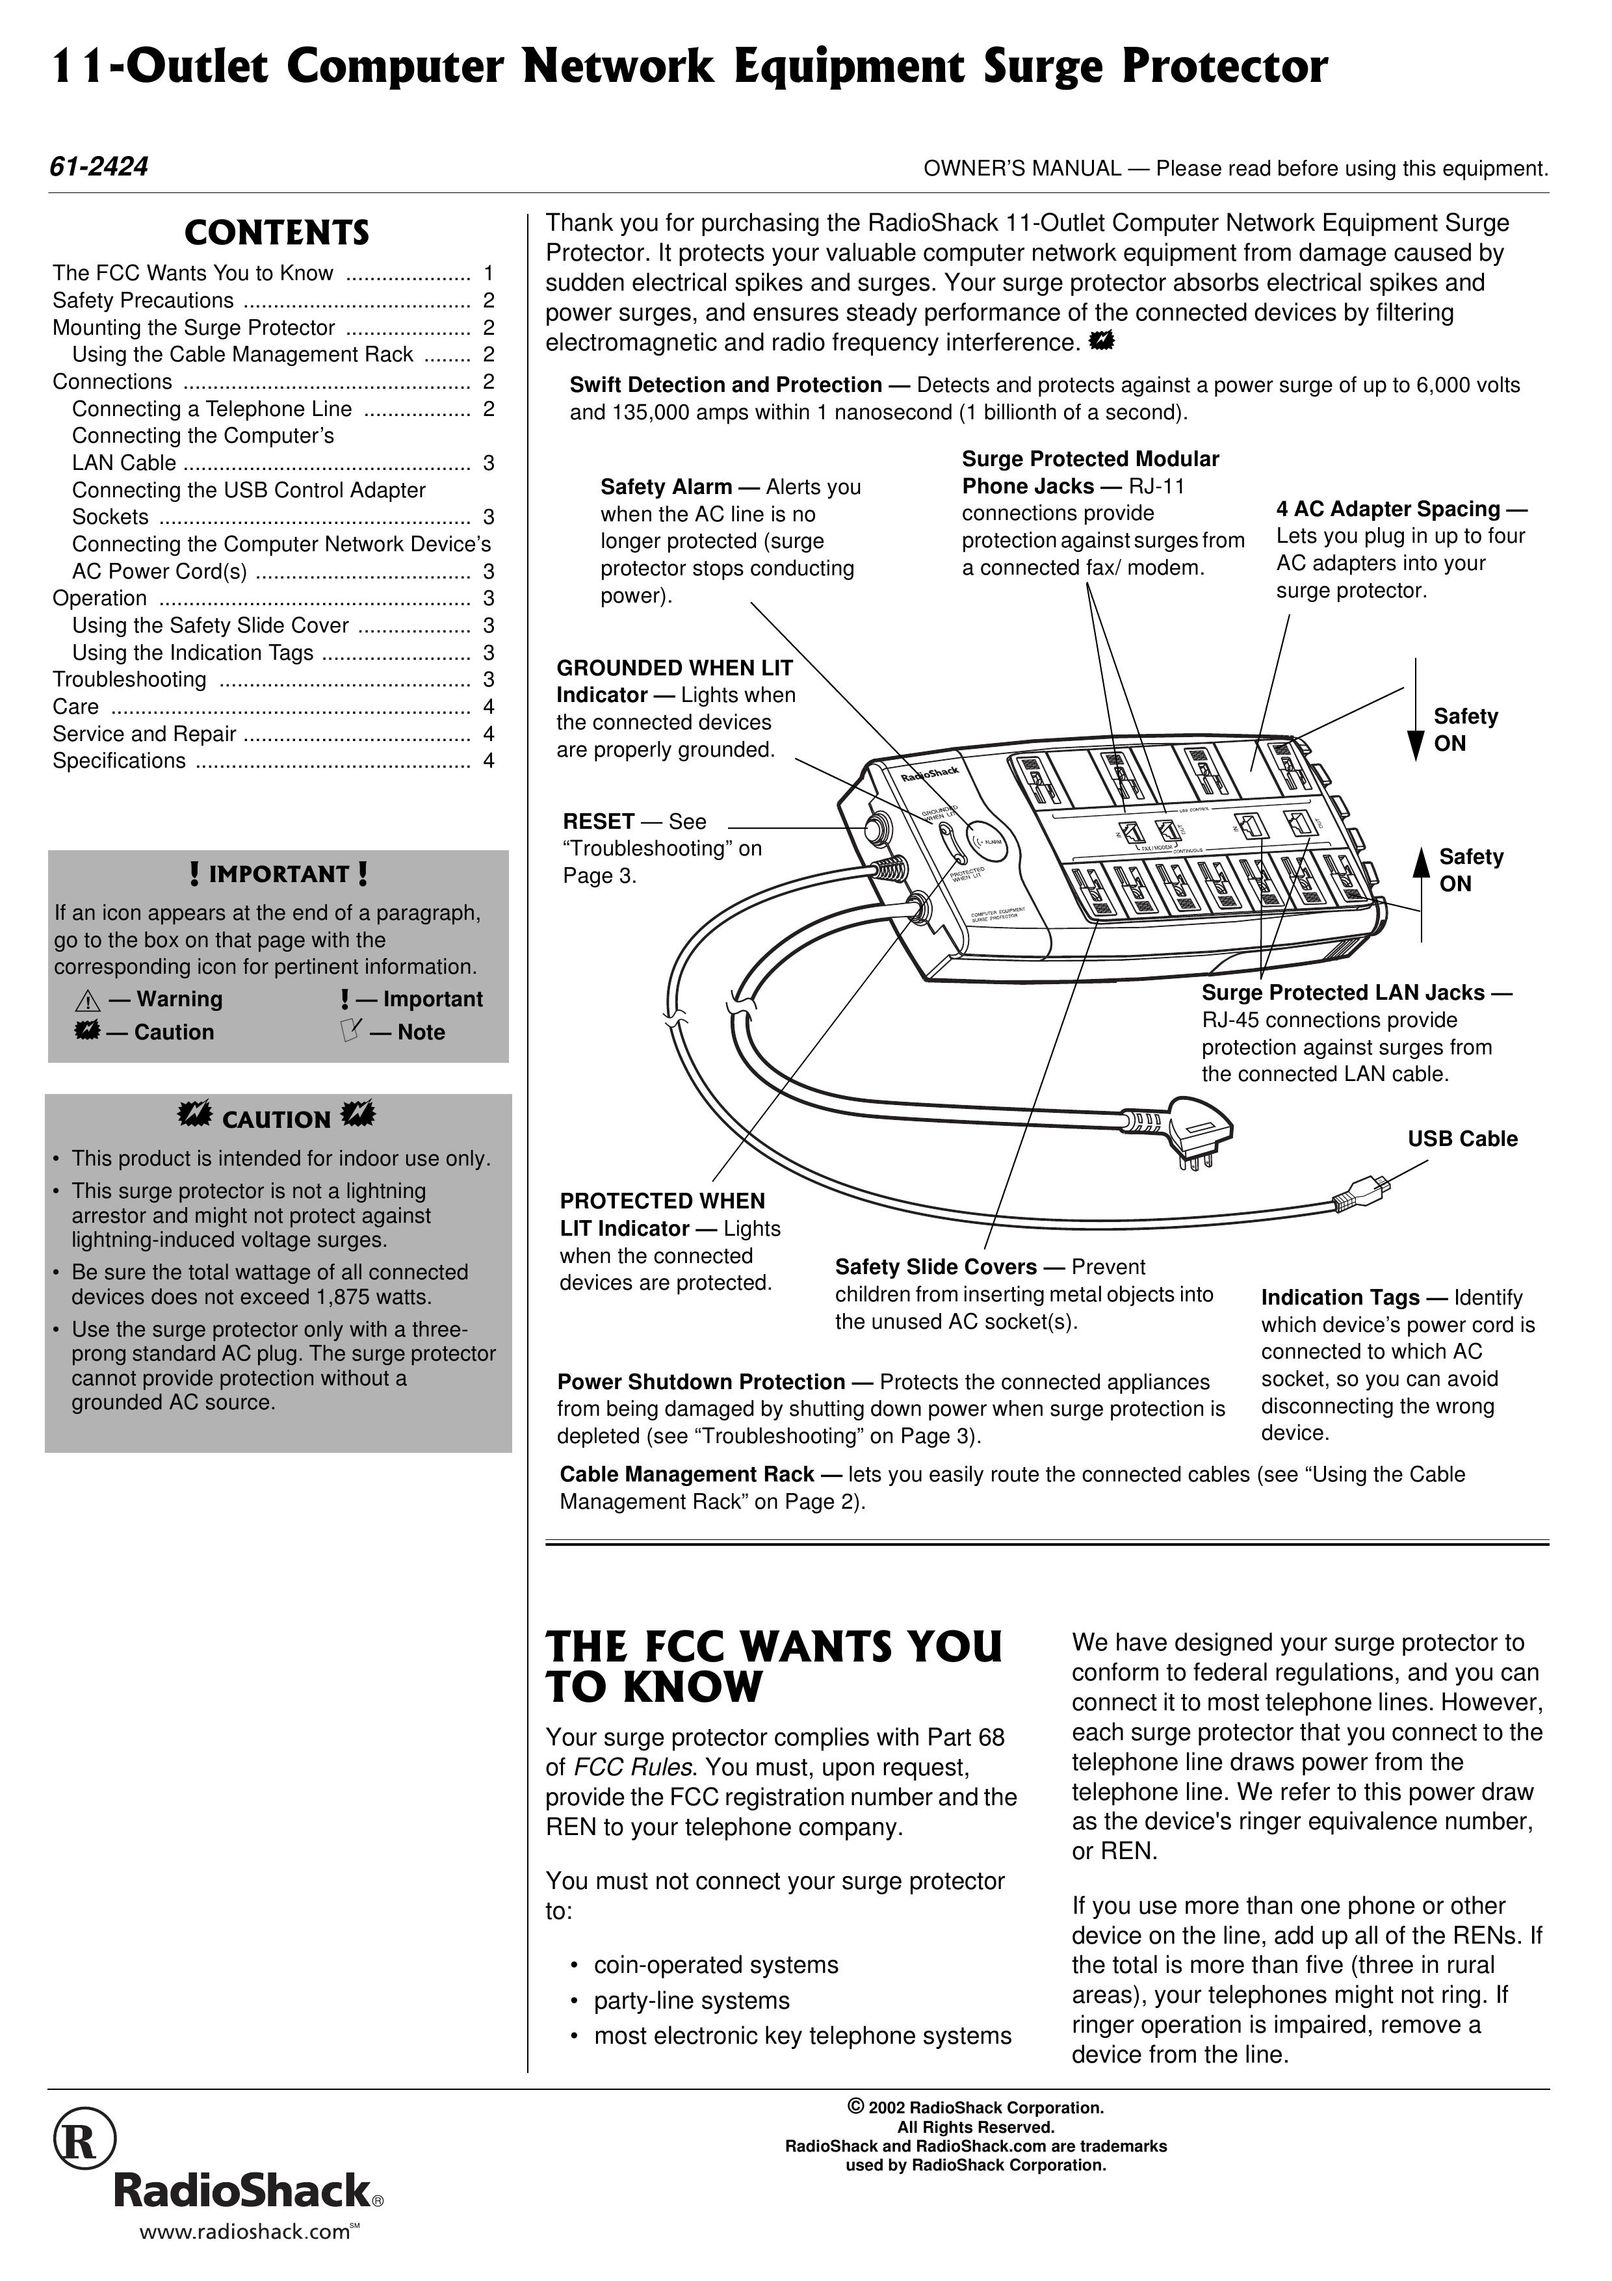 Radio Shack 61-2424 Surge Protector User Manual